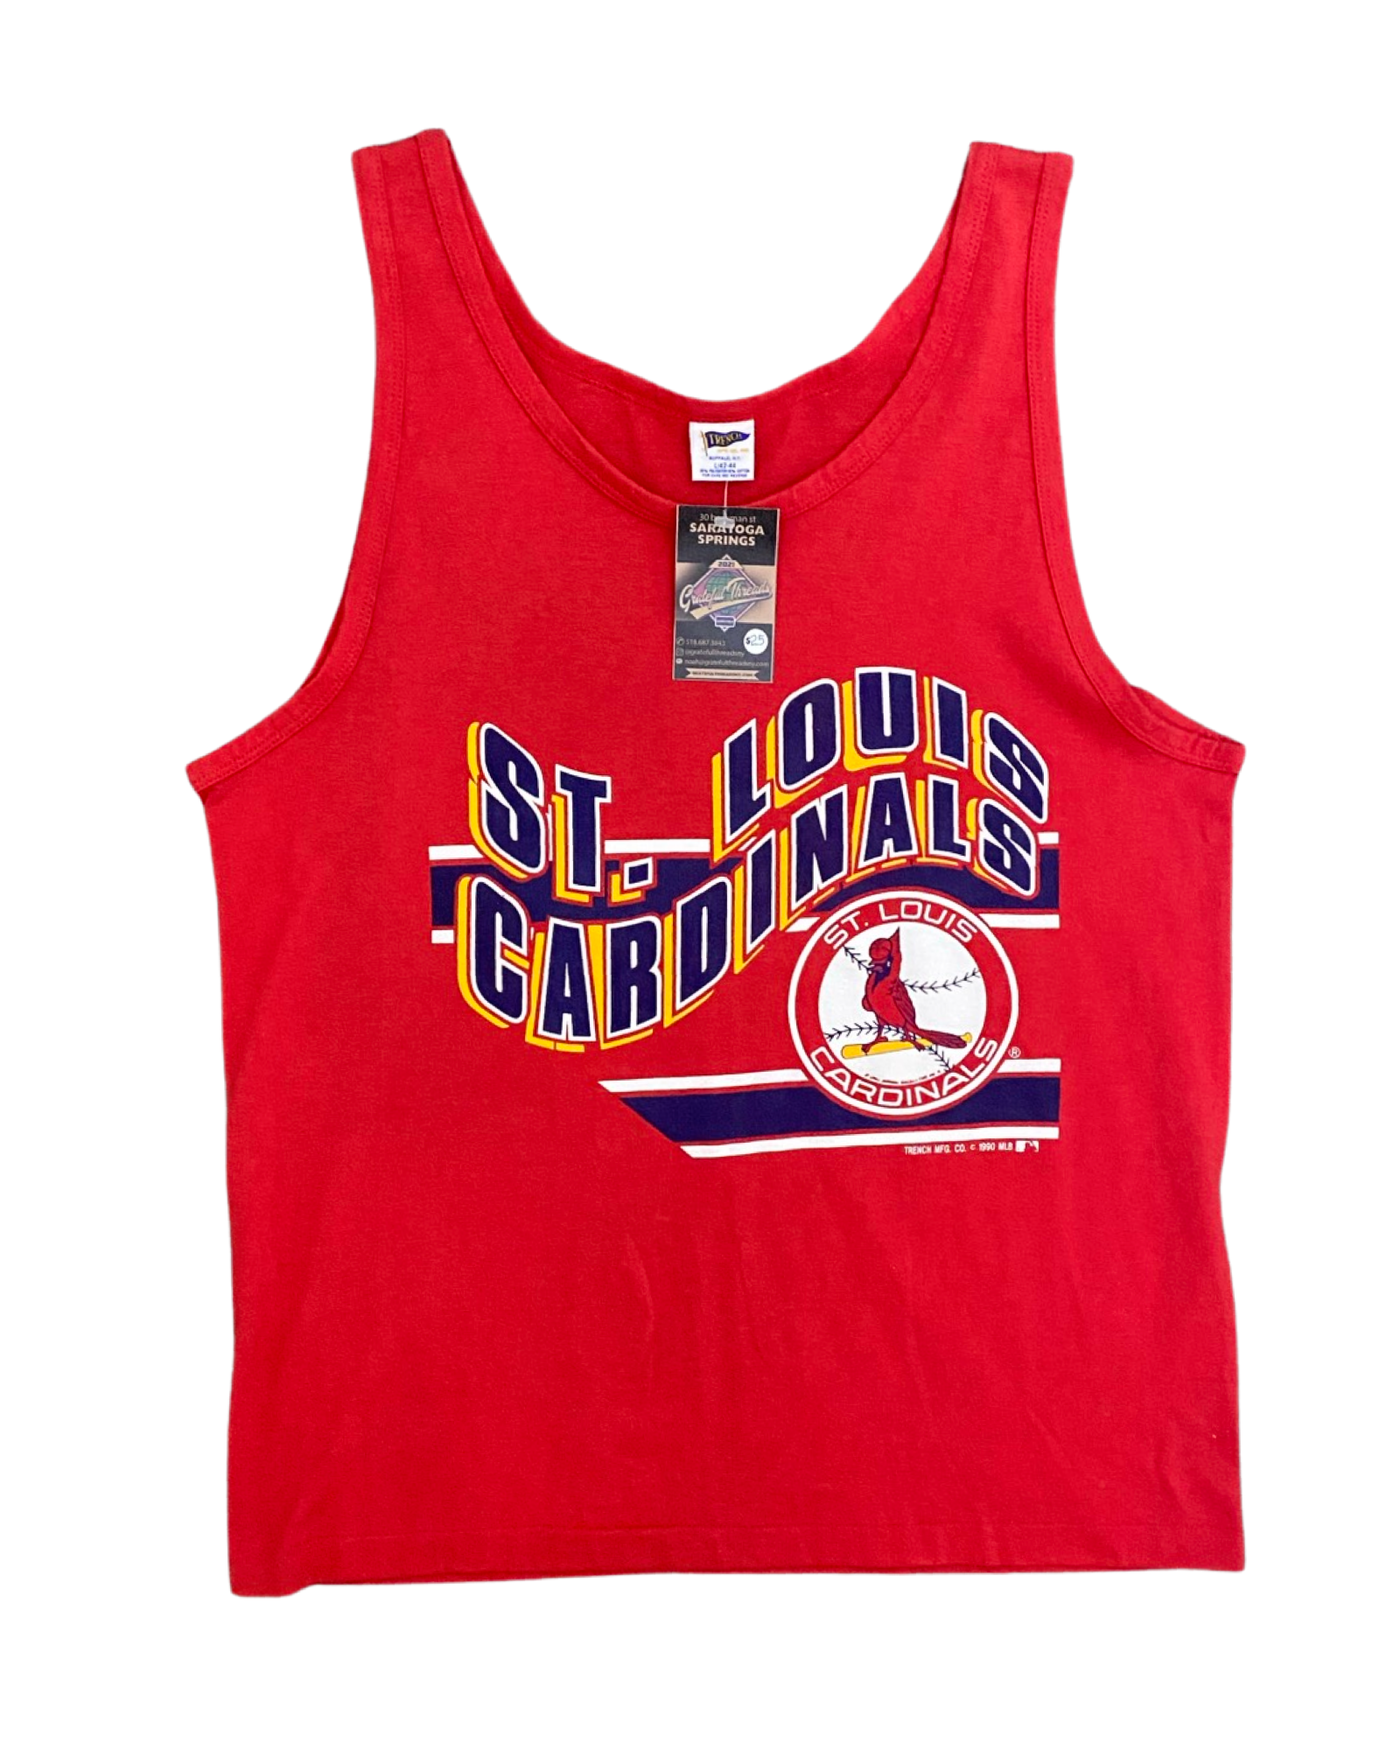 Vintage 1990 St. Louis Cardinals Tank Top